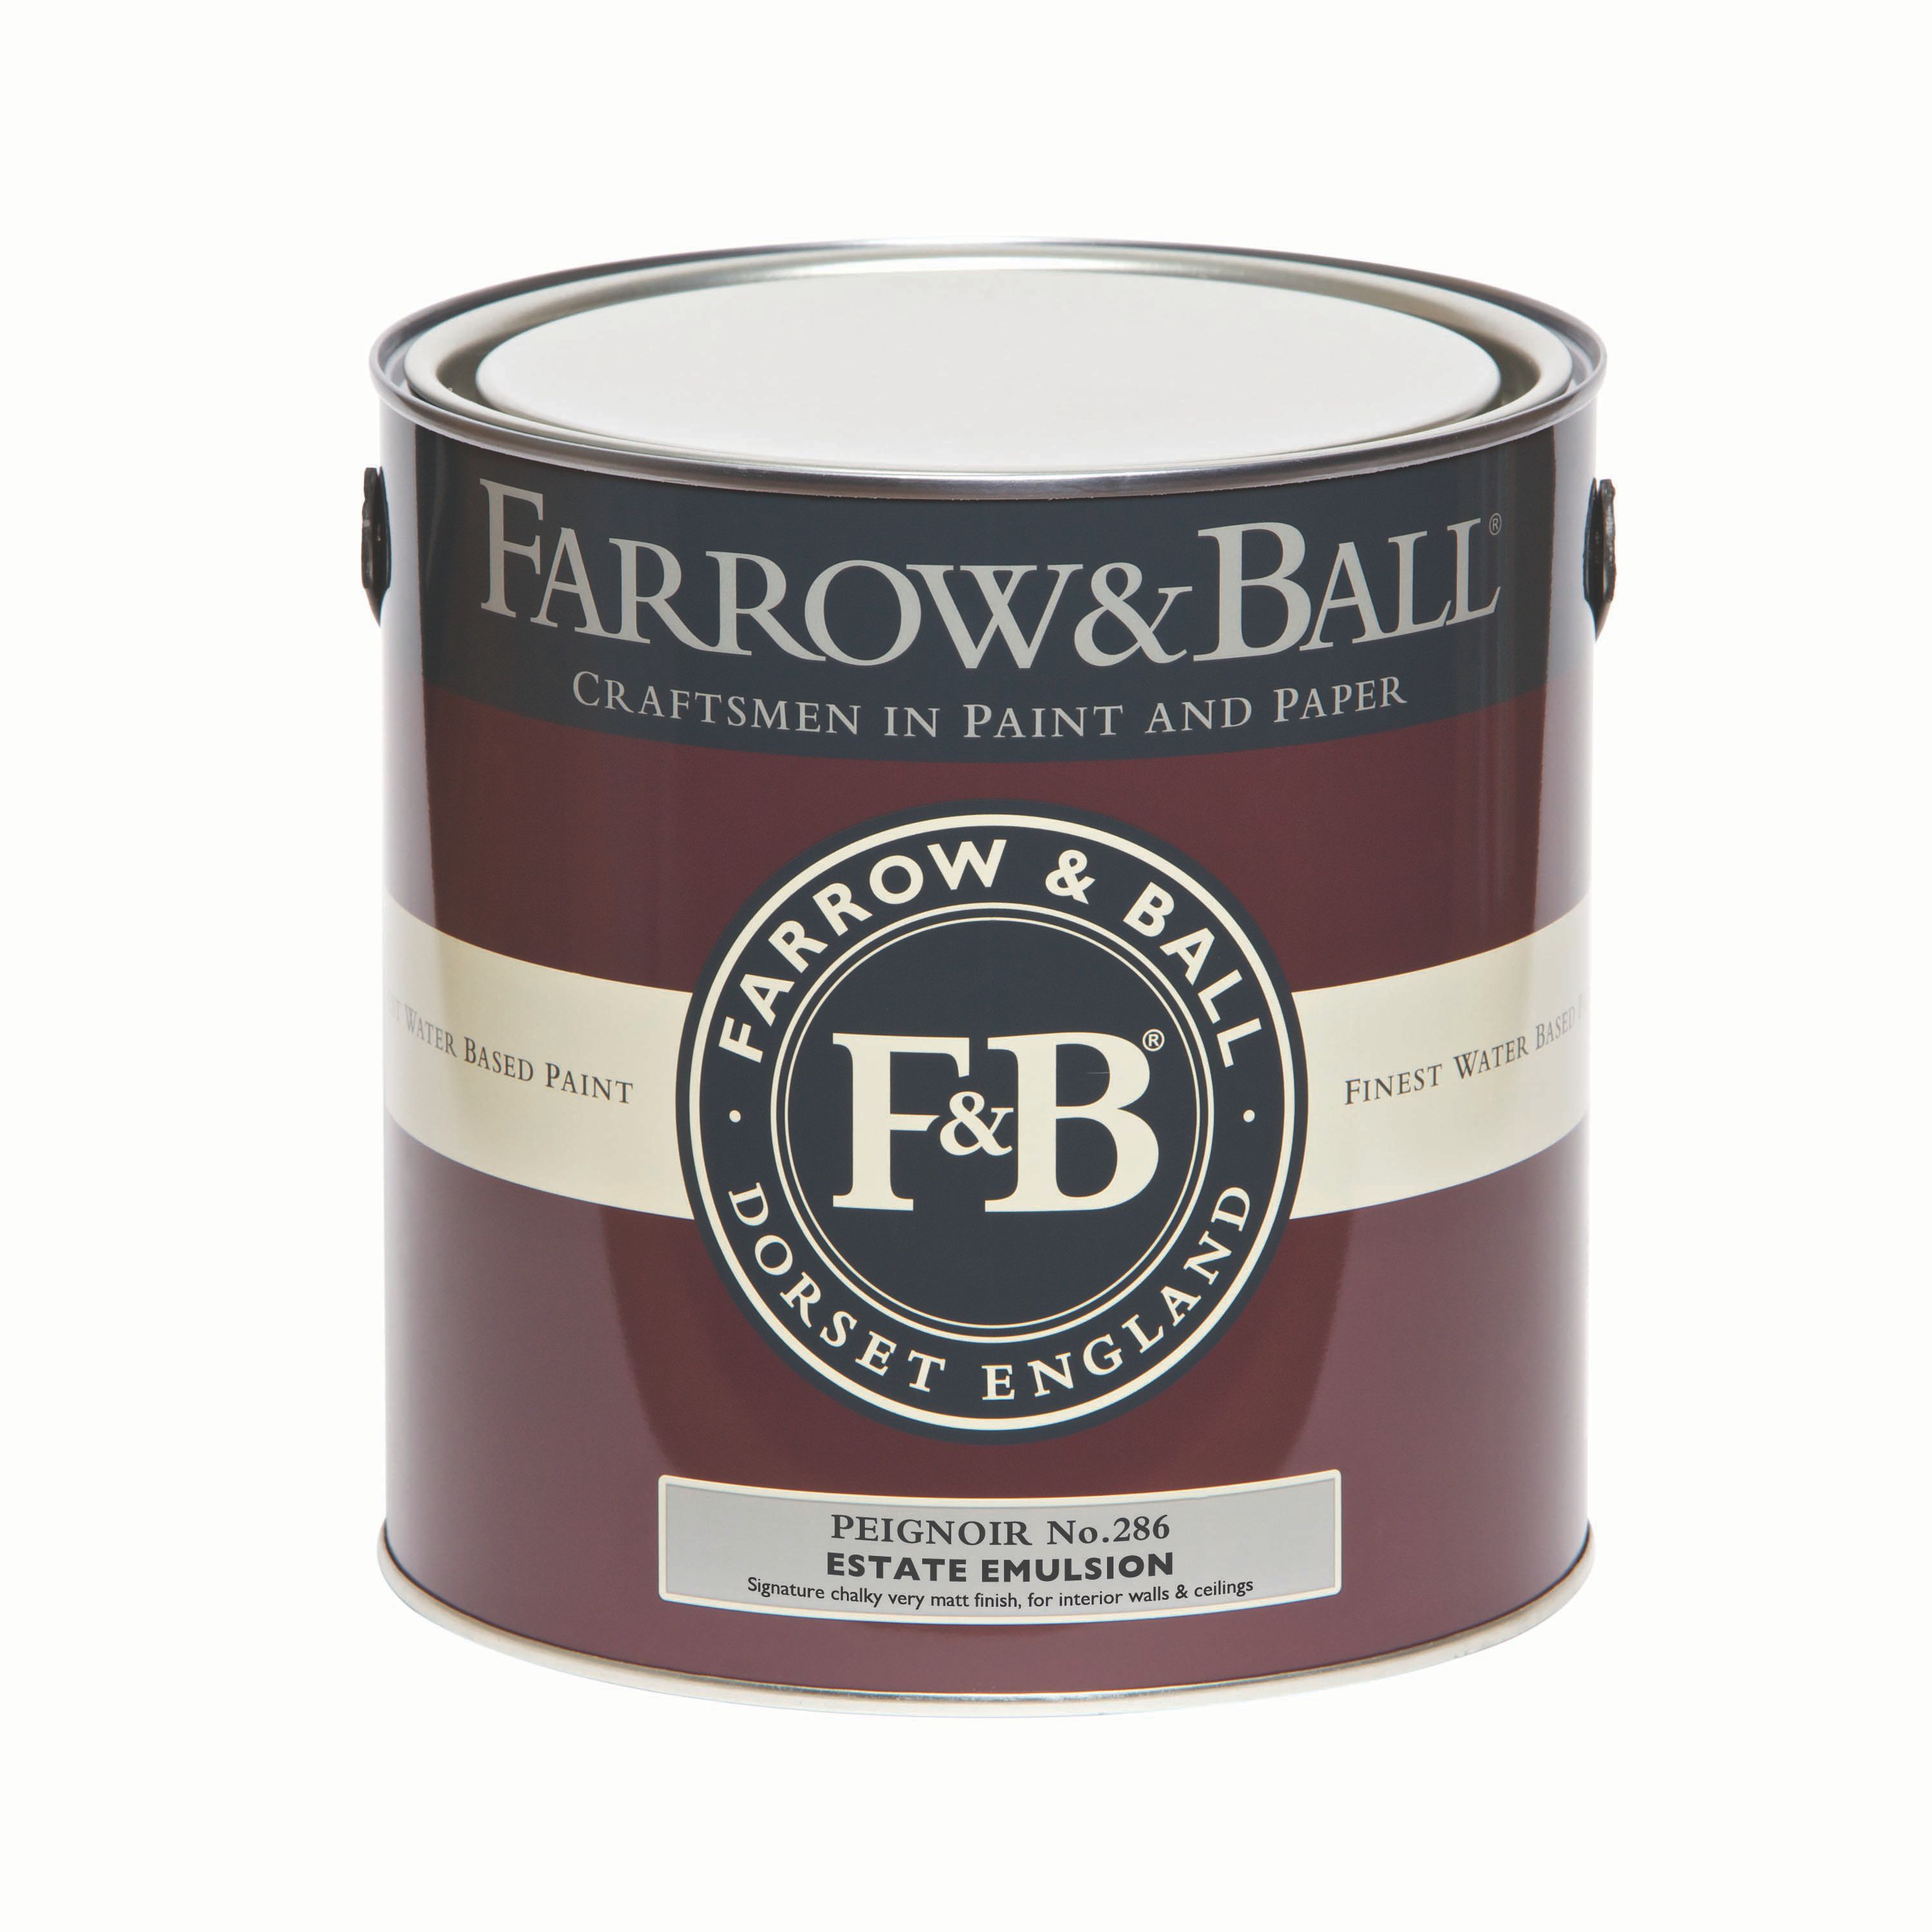 Farrow & Ball Estate Peignoir No.286 Matt Emulsion paint, 2.5L